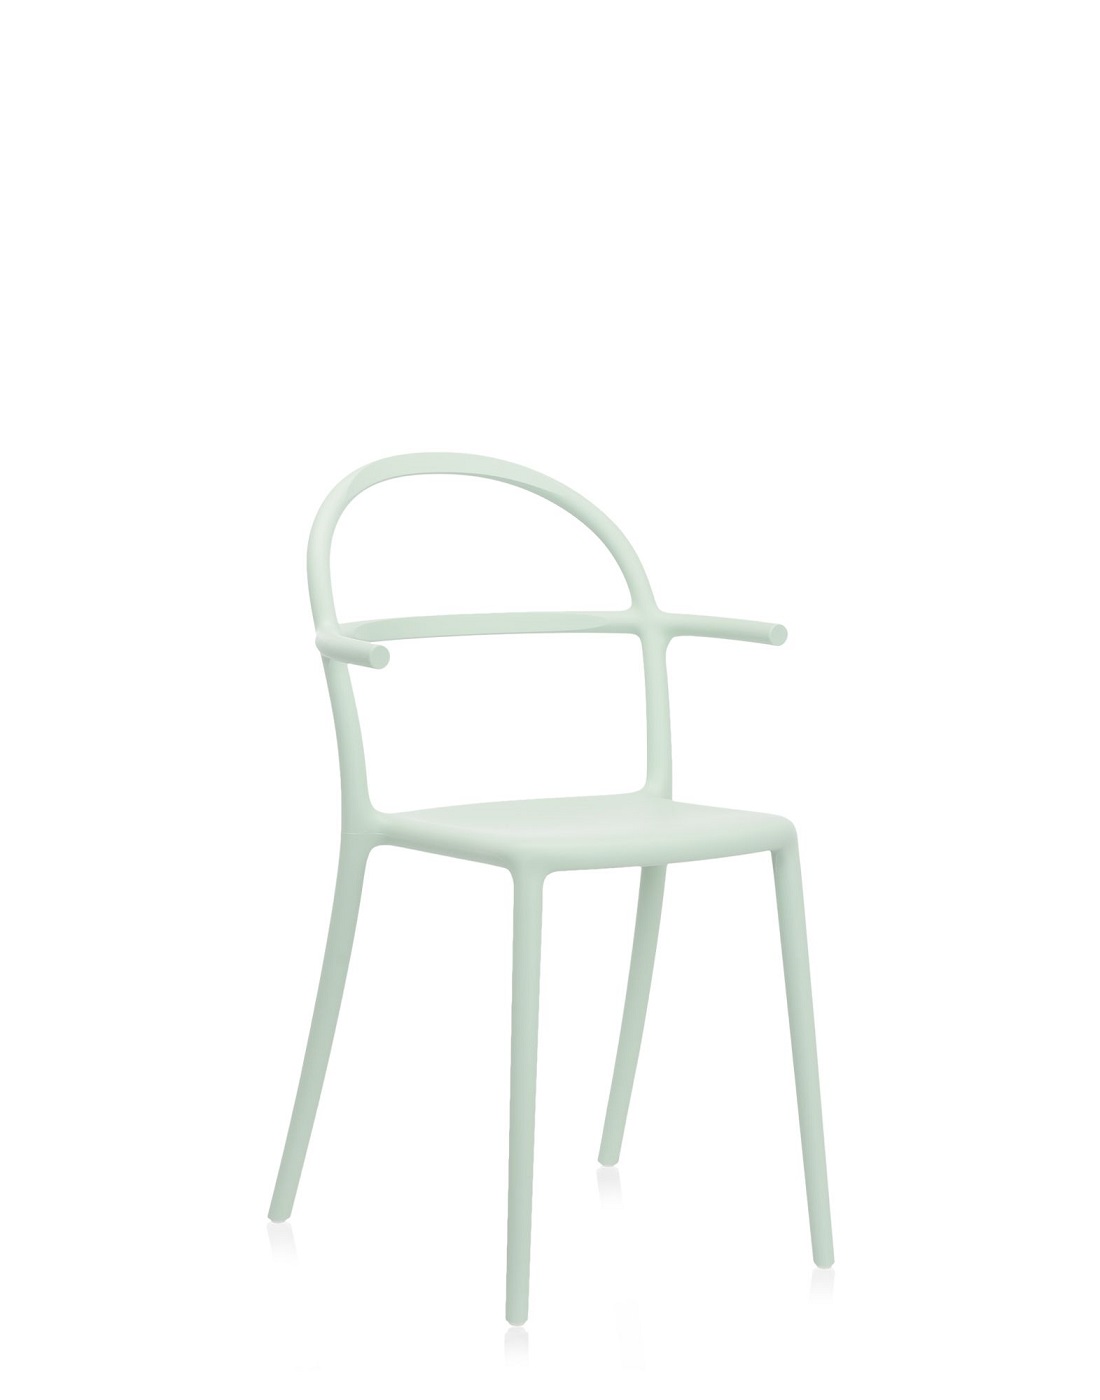 chair-generic-c-green-philippe-starck-kartell